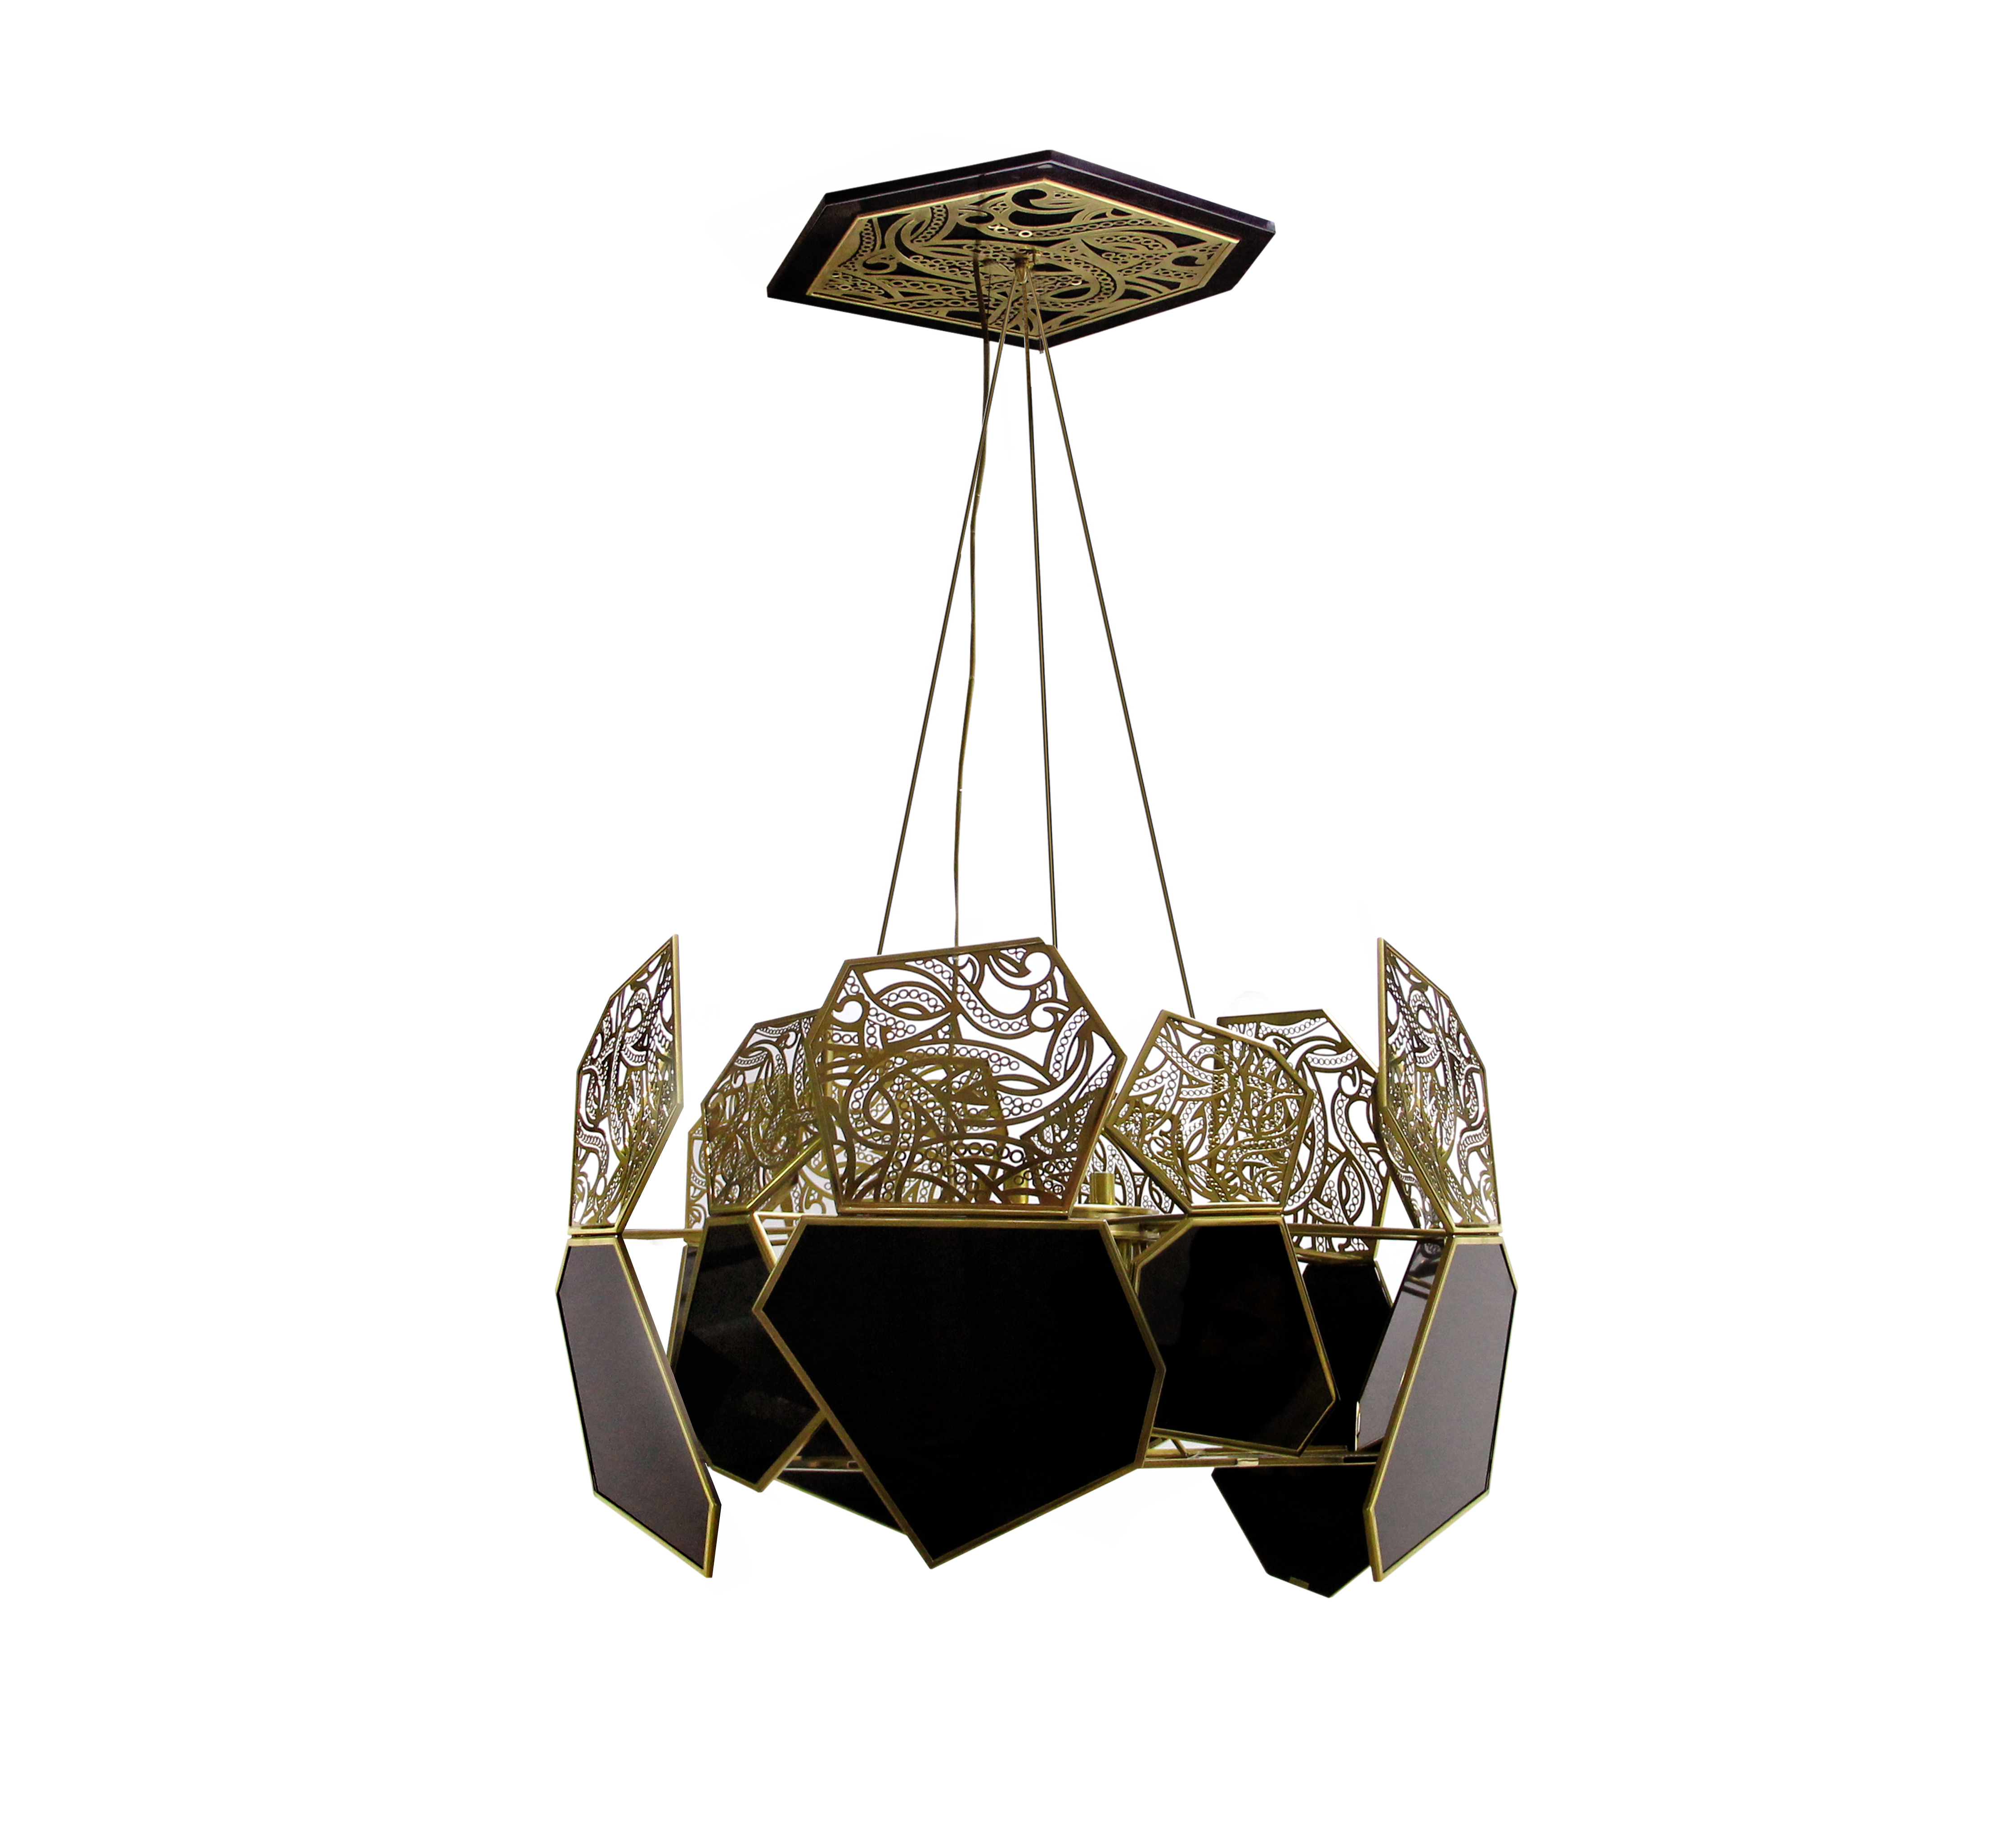 Hypnotic chandelier by KOKET